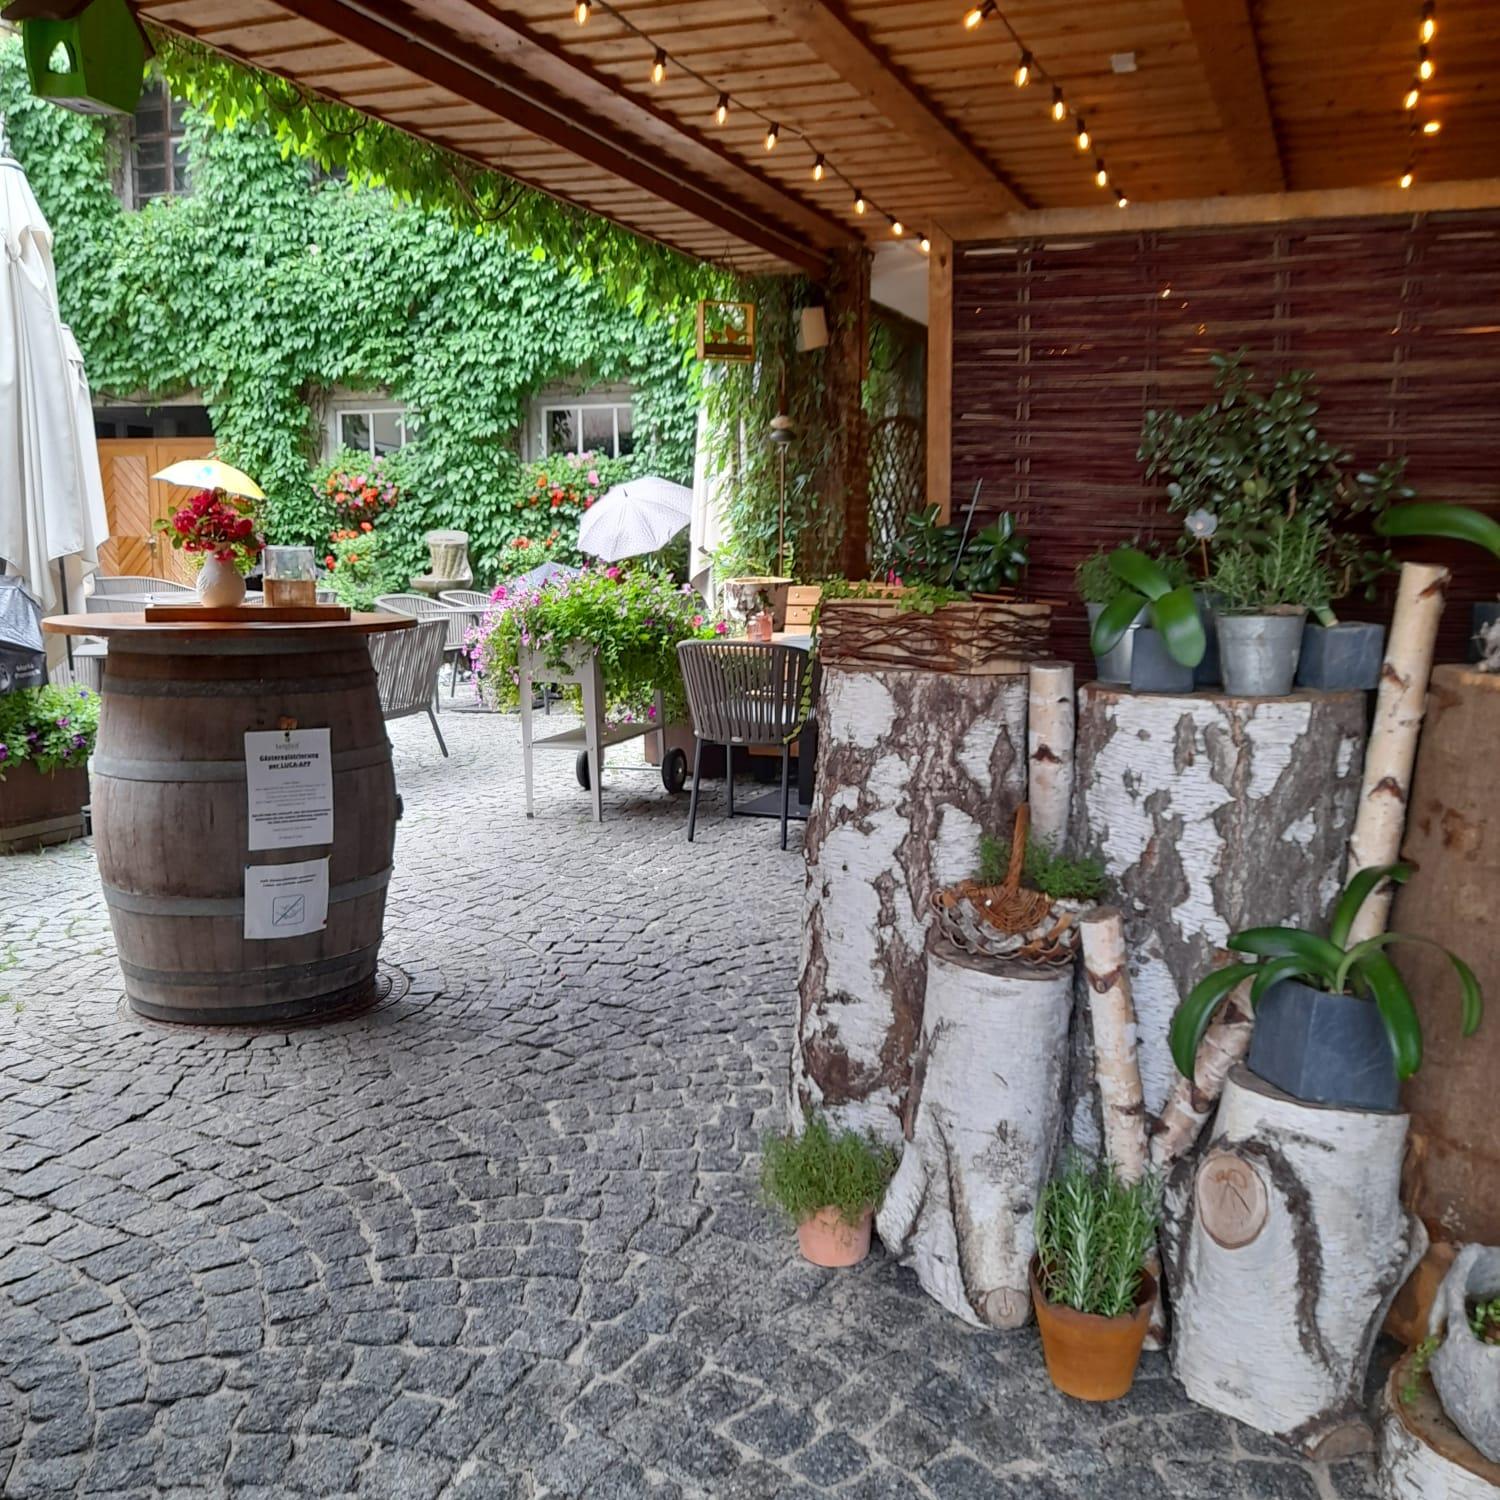 Restaurant "Restaurant Ursprung - Gasthof Berghof" in Presseck